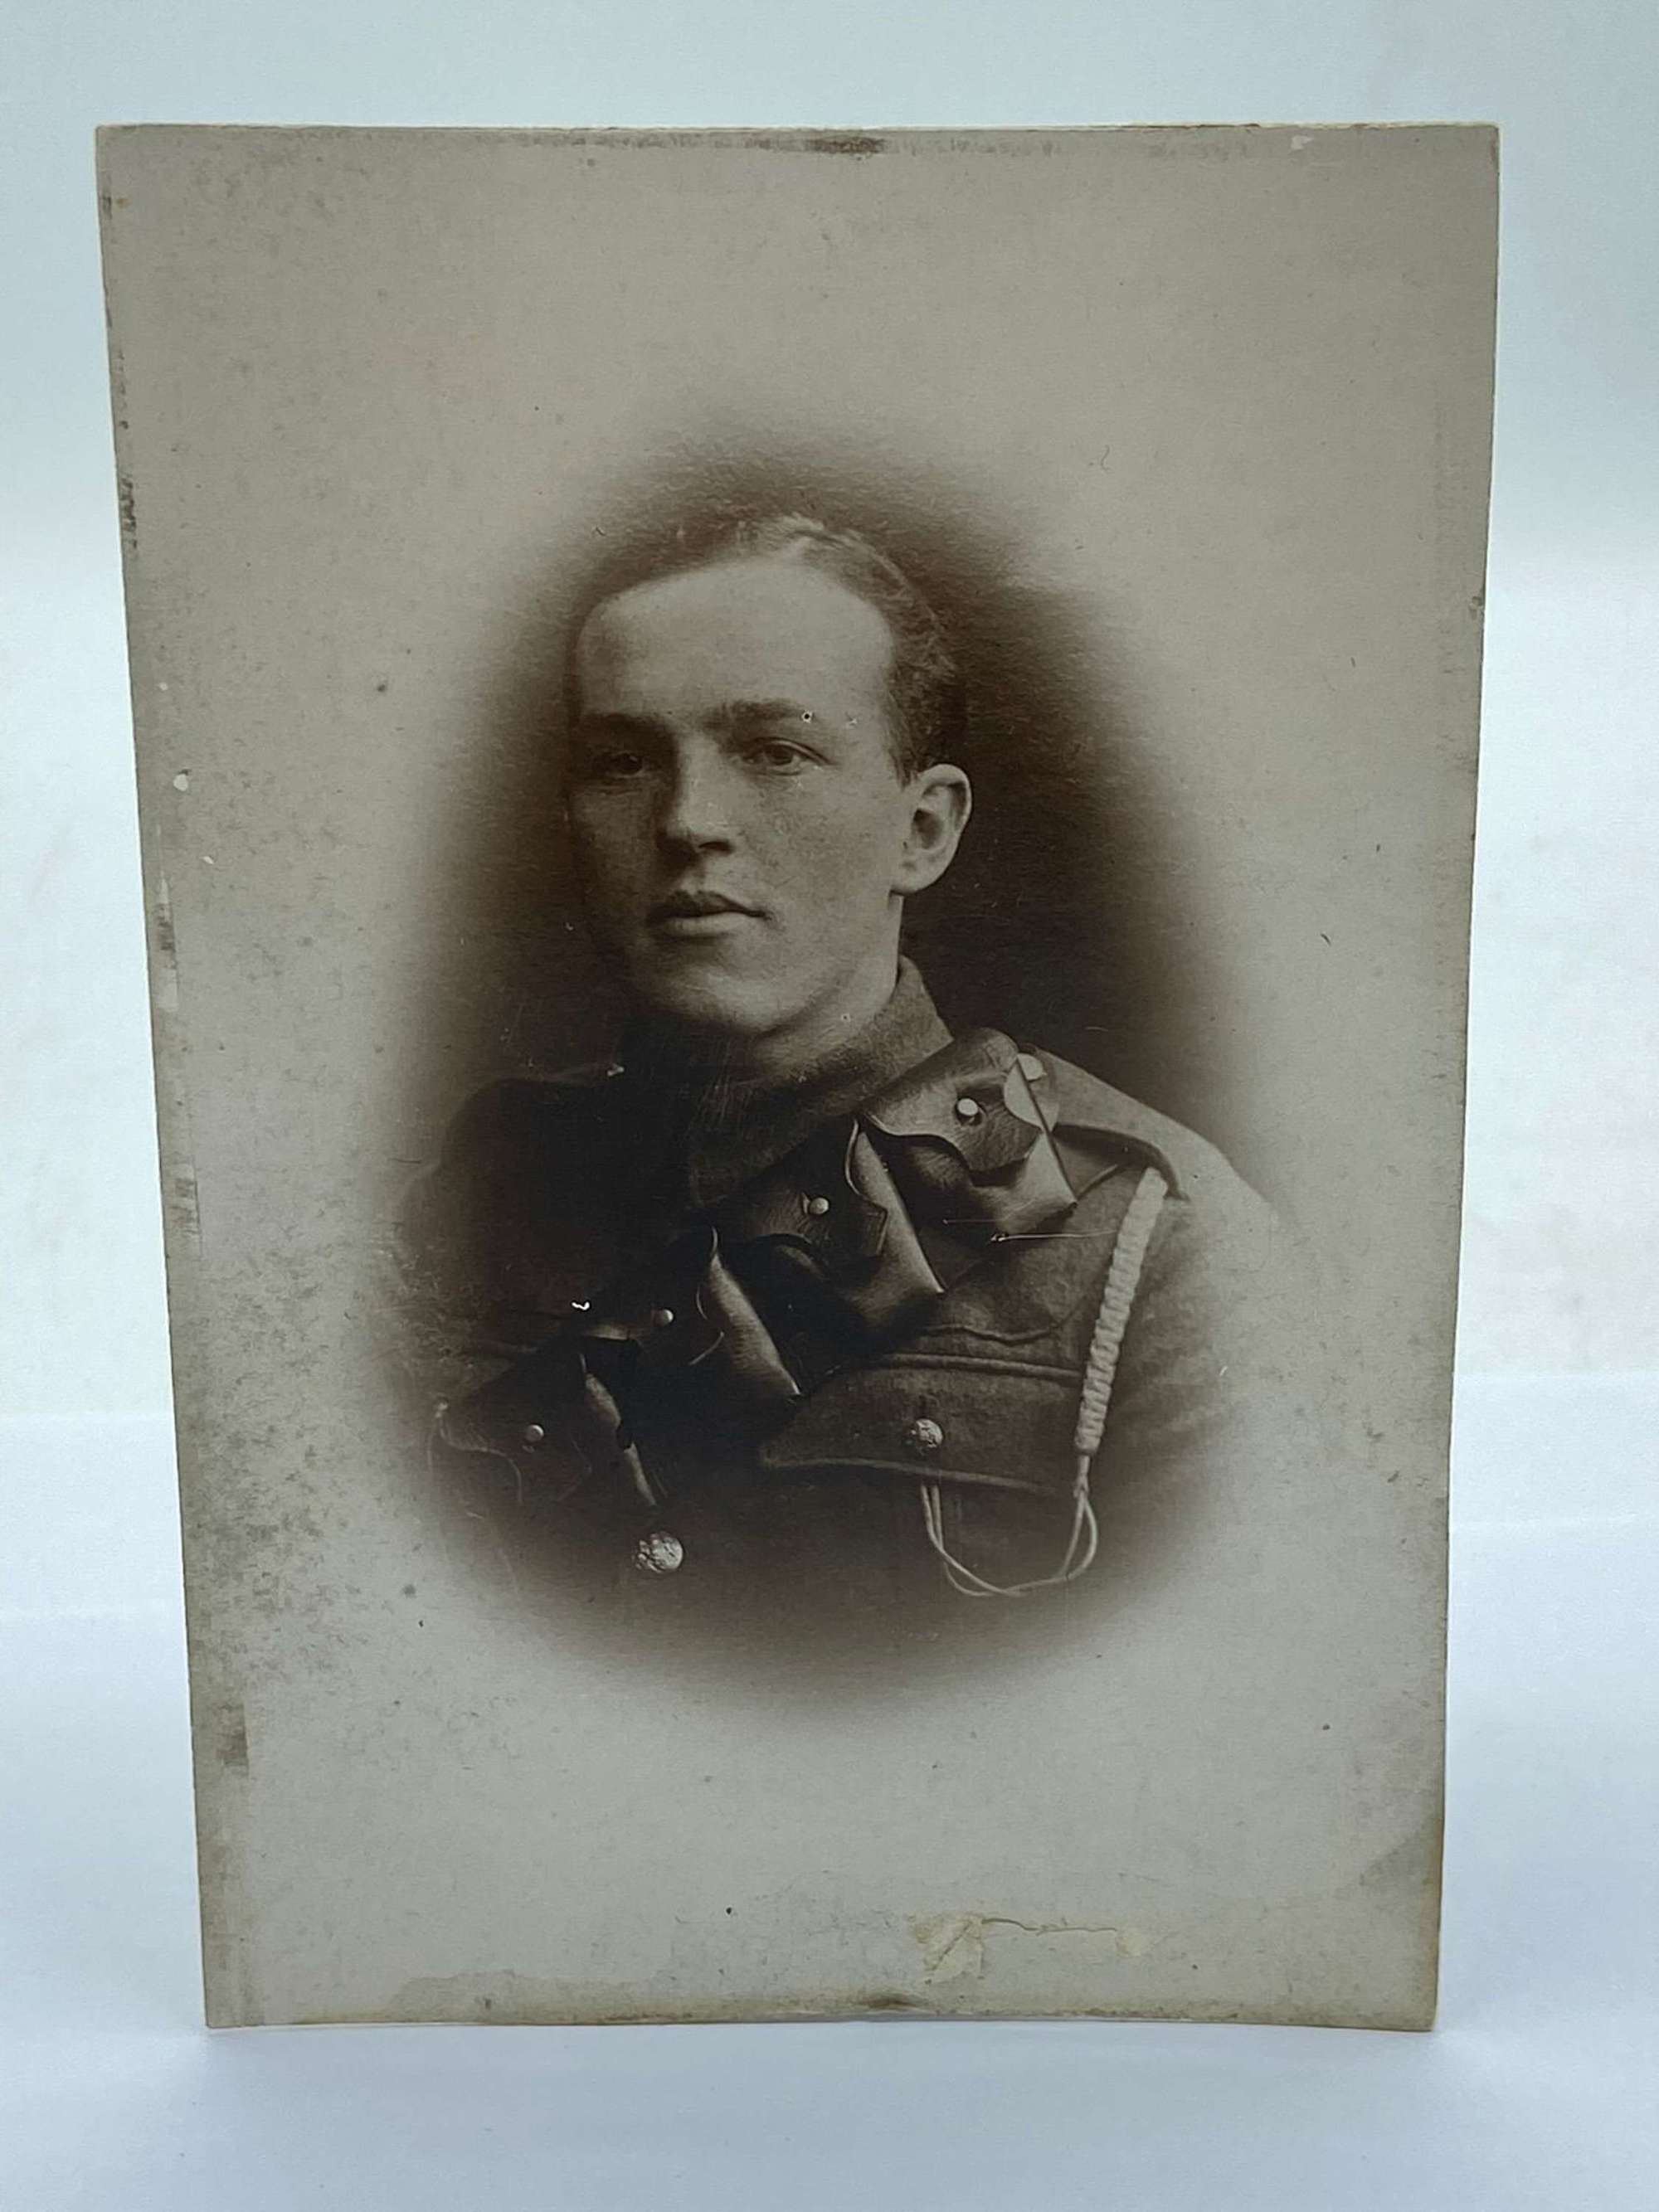 WW1 British Army General Service Portrait Photogragh of KIA Soldier